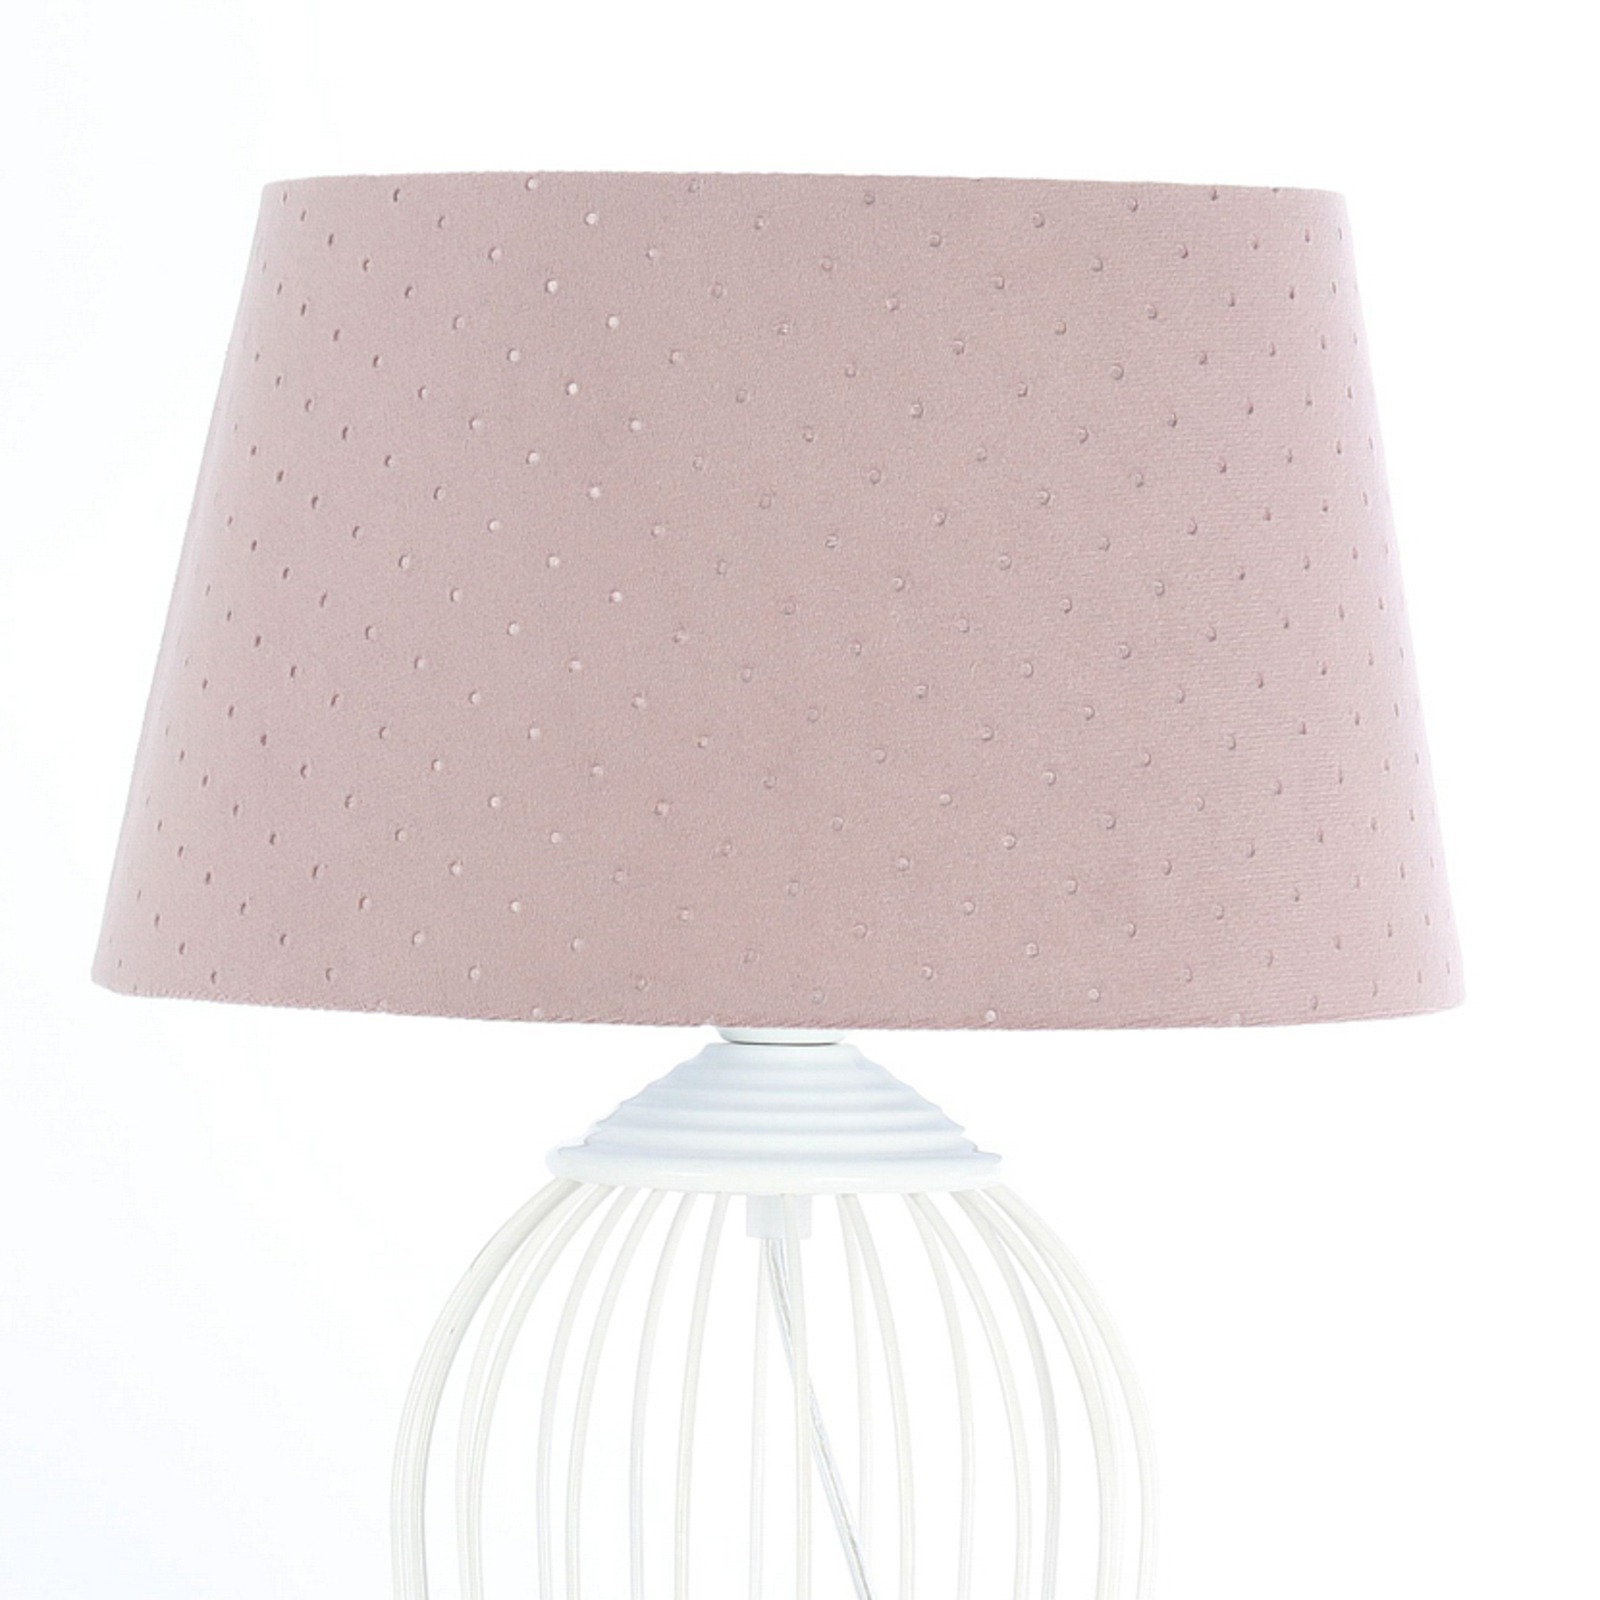 Tafellamp Rosabelle met voet in kooivorm, roze